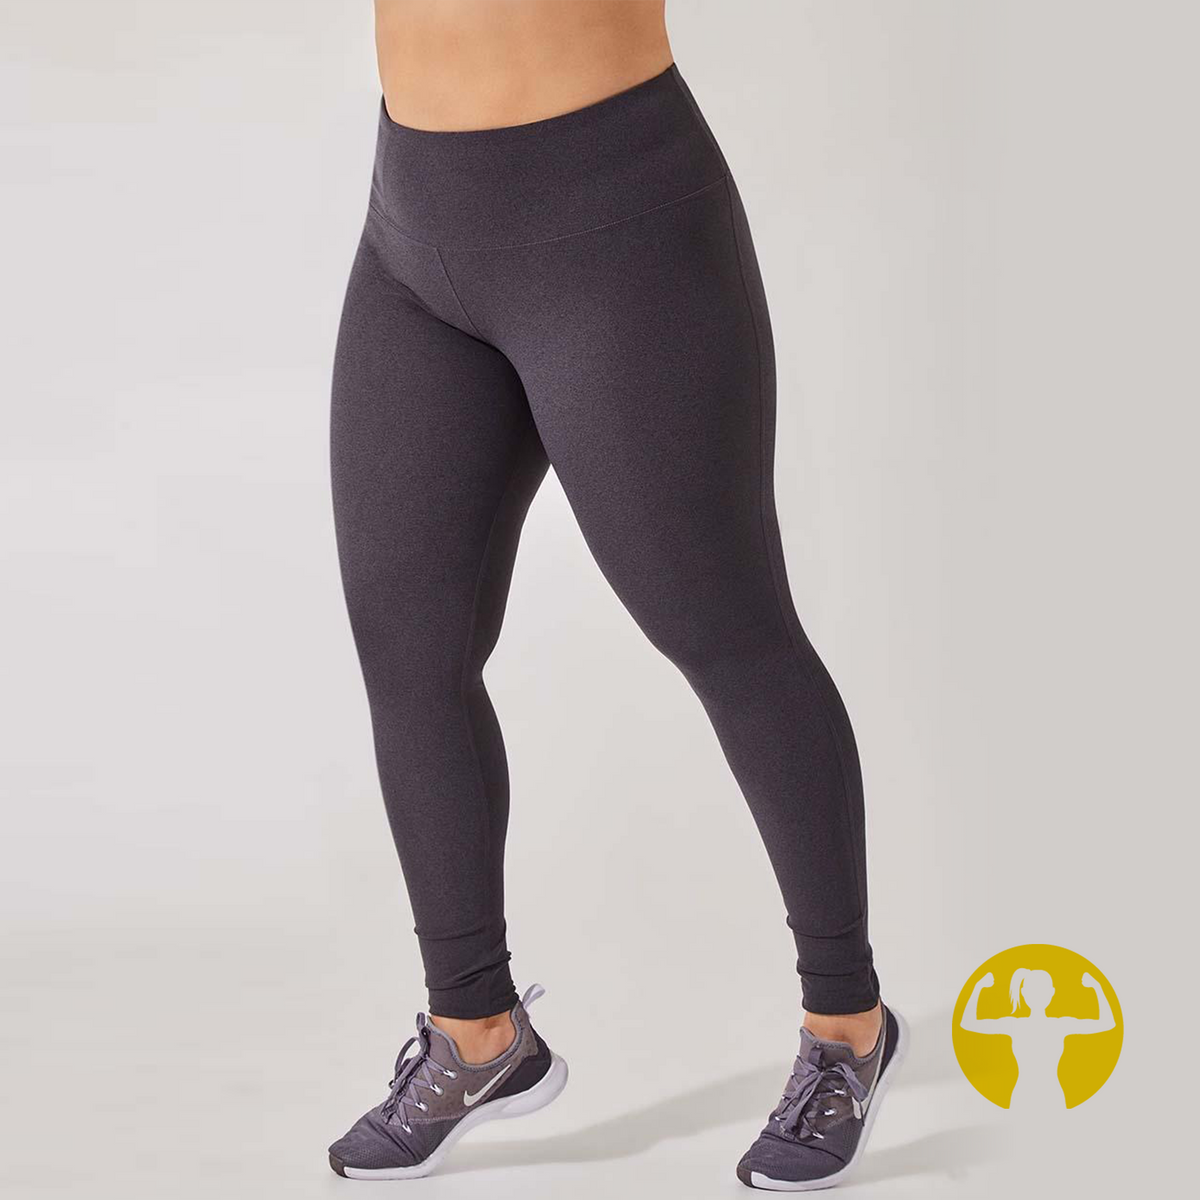 Womens Plus Size Stretch Leggings Full-Length Ultra Soft Tights  Pants(Burgundy,XXL)